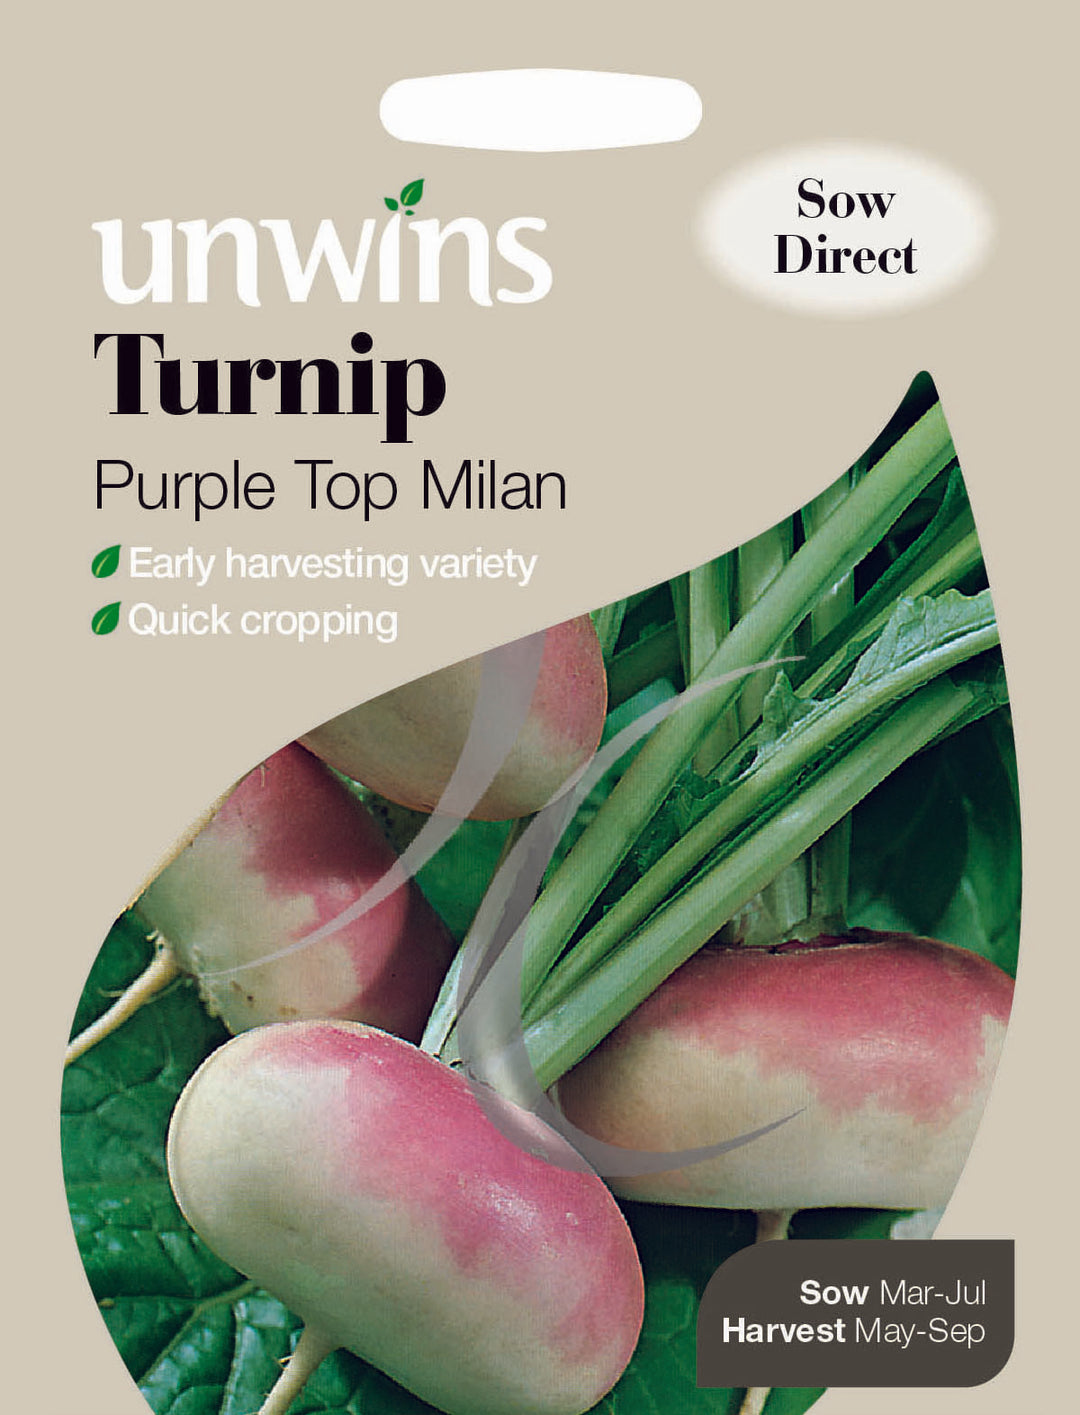 Turnip Purple Top Milan